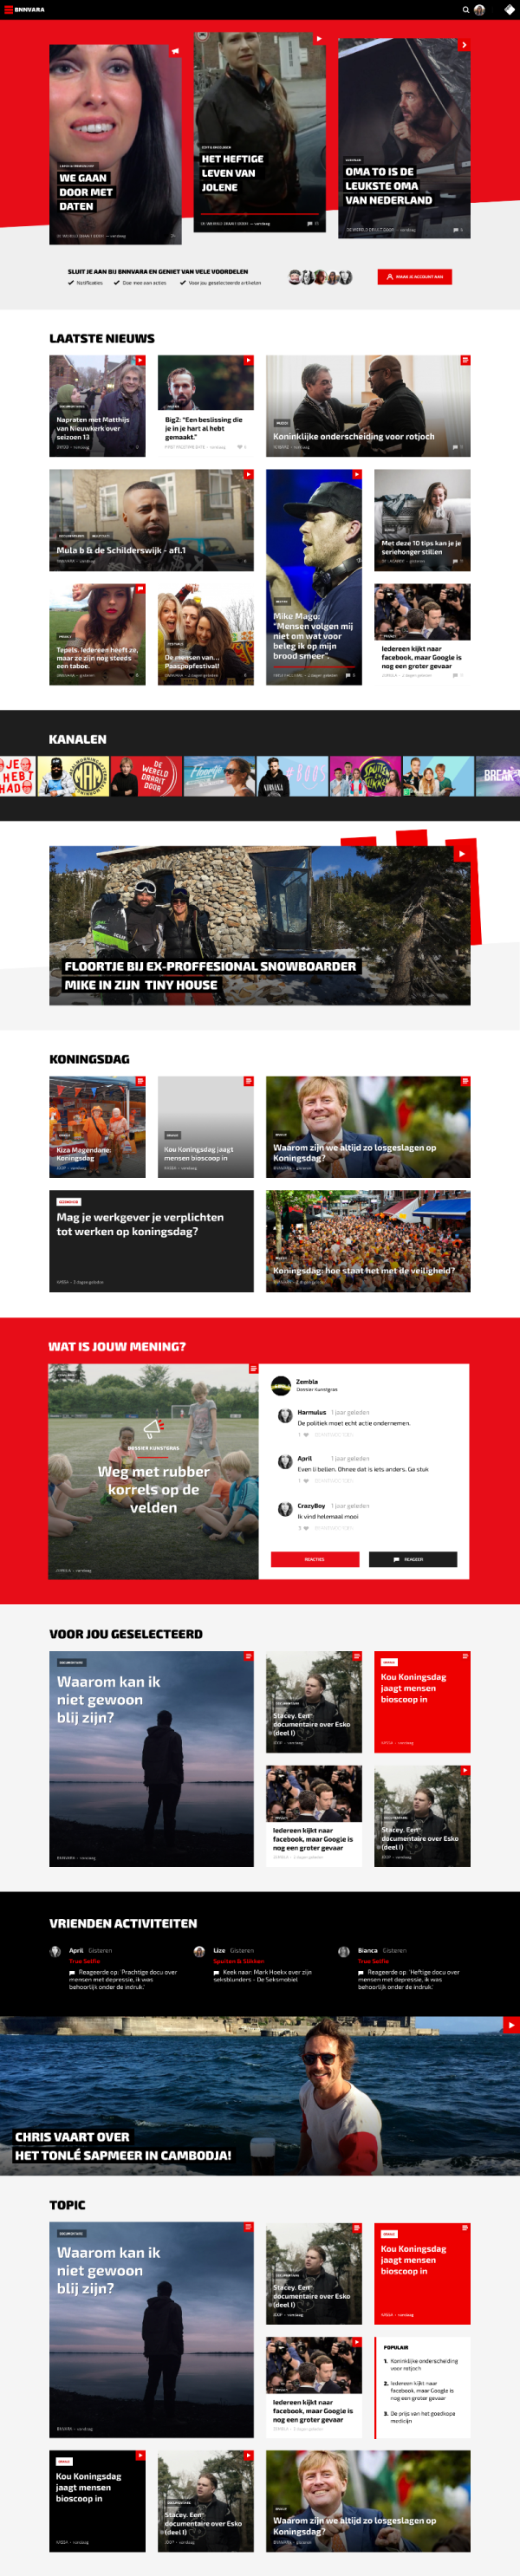 BNNVARA.nl Homepage design